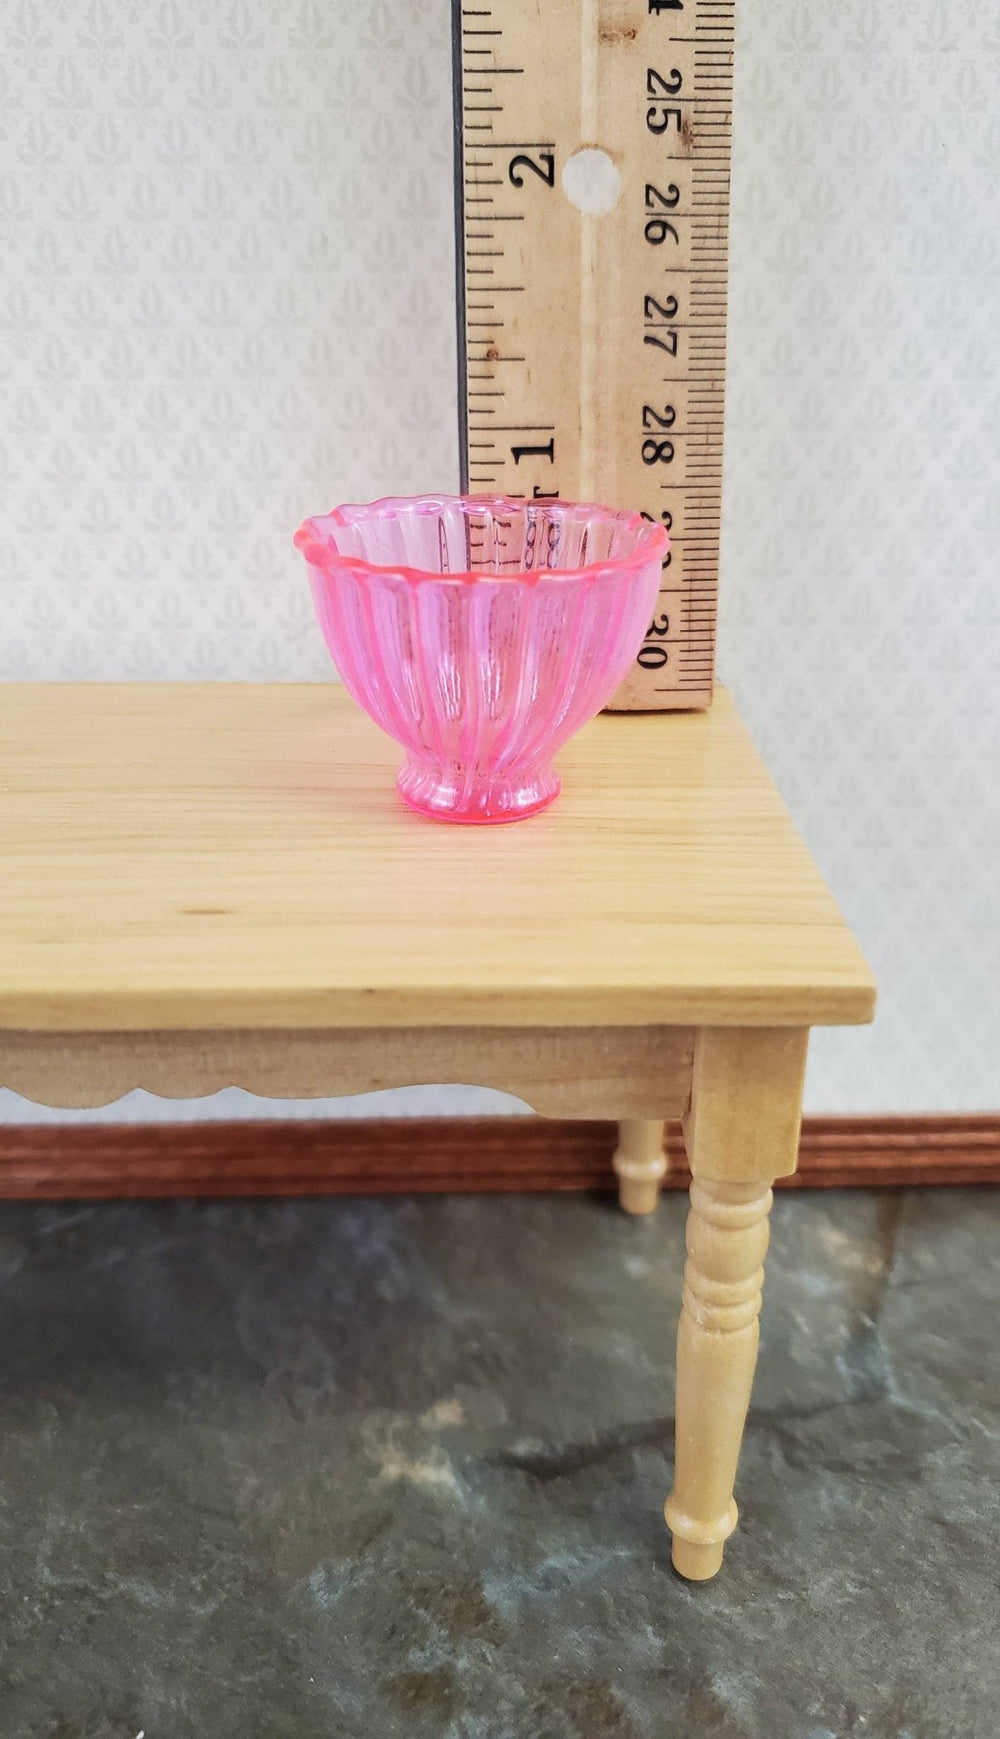 Miniature Glass Serving Bowl 1:6 Scale Bright Pink 6" tall - Miniature Crush